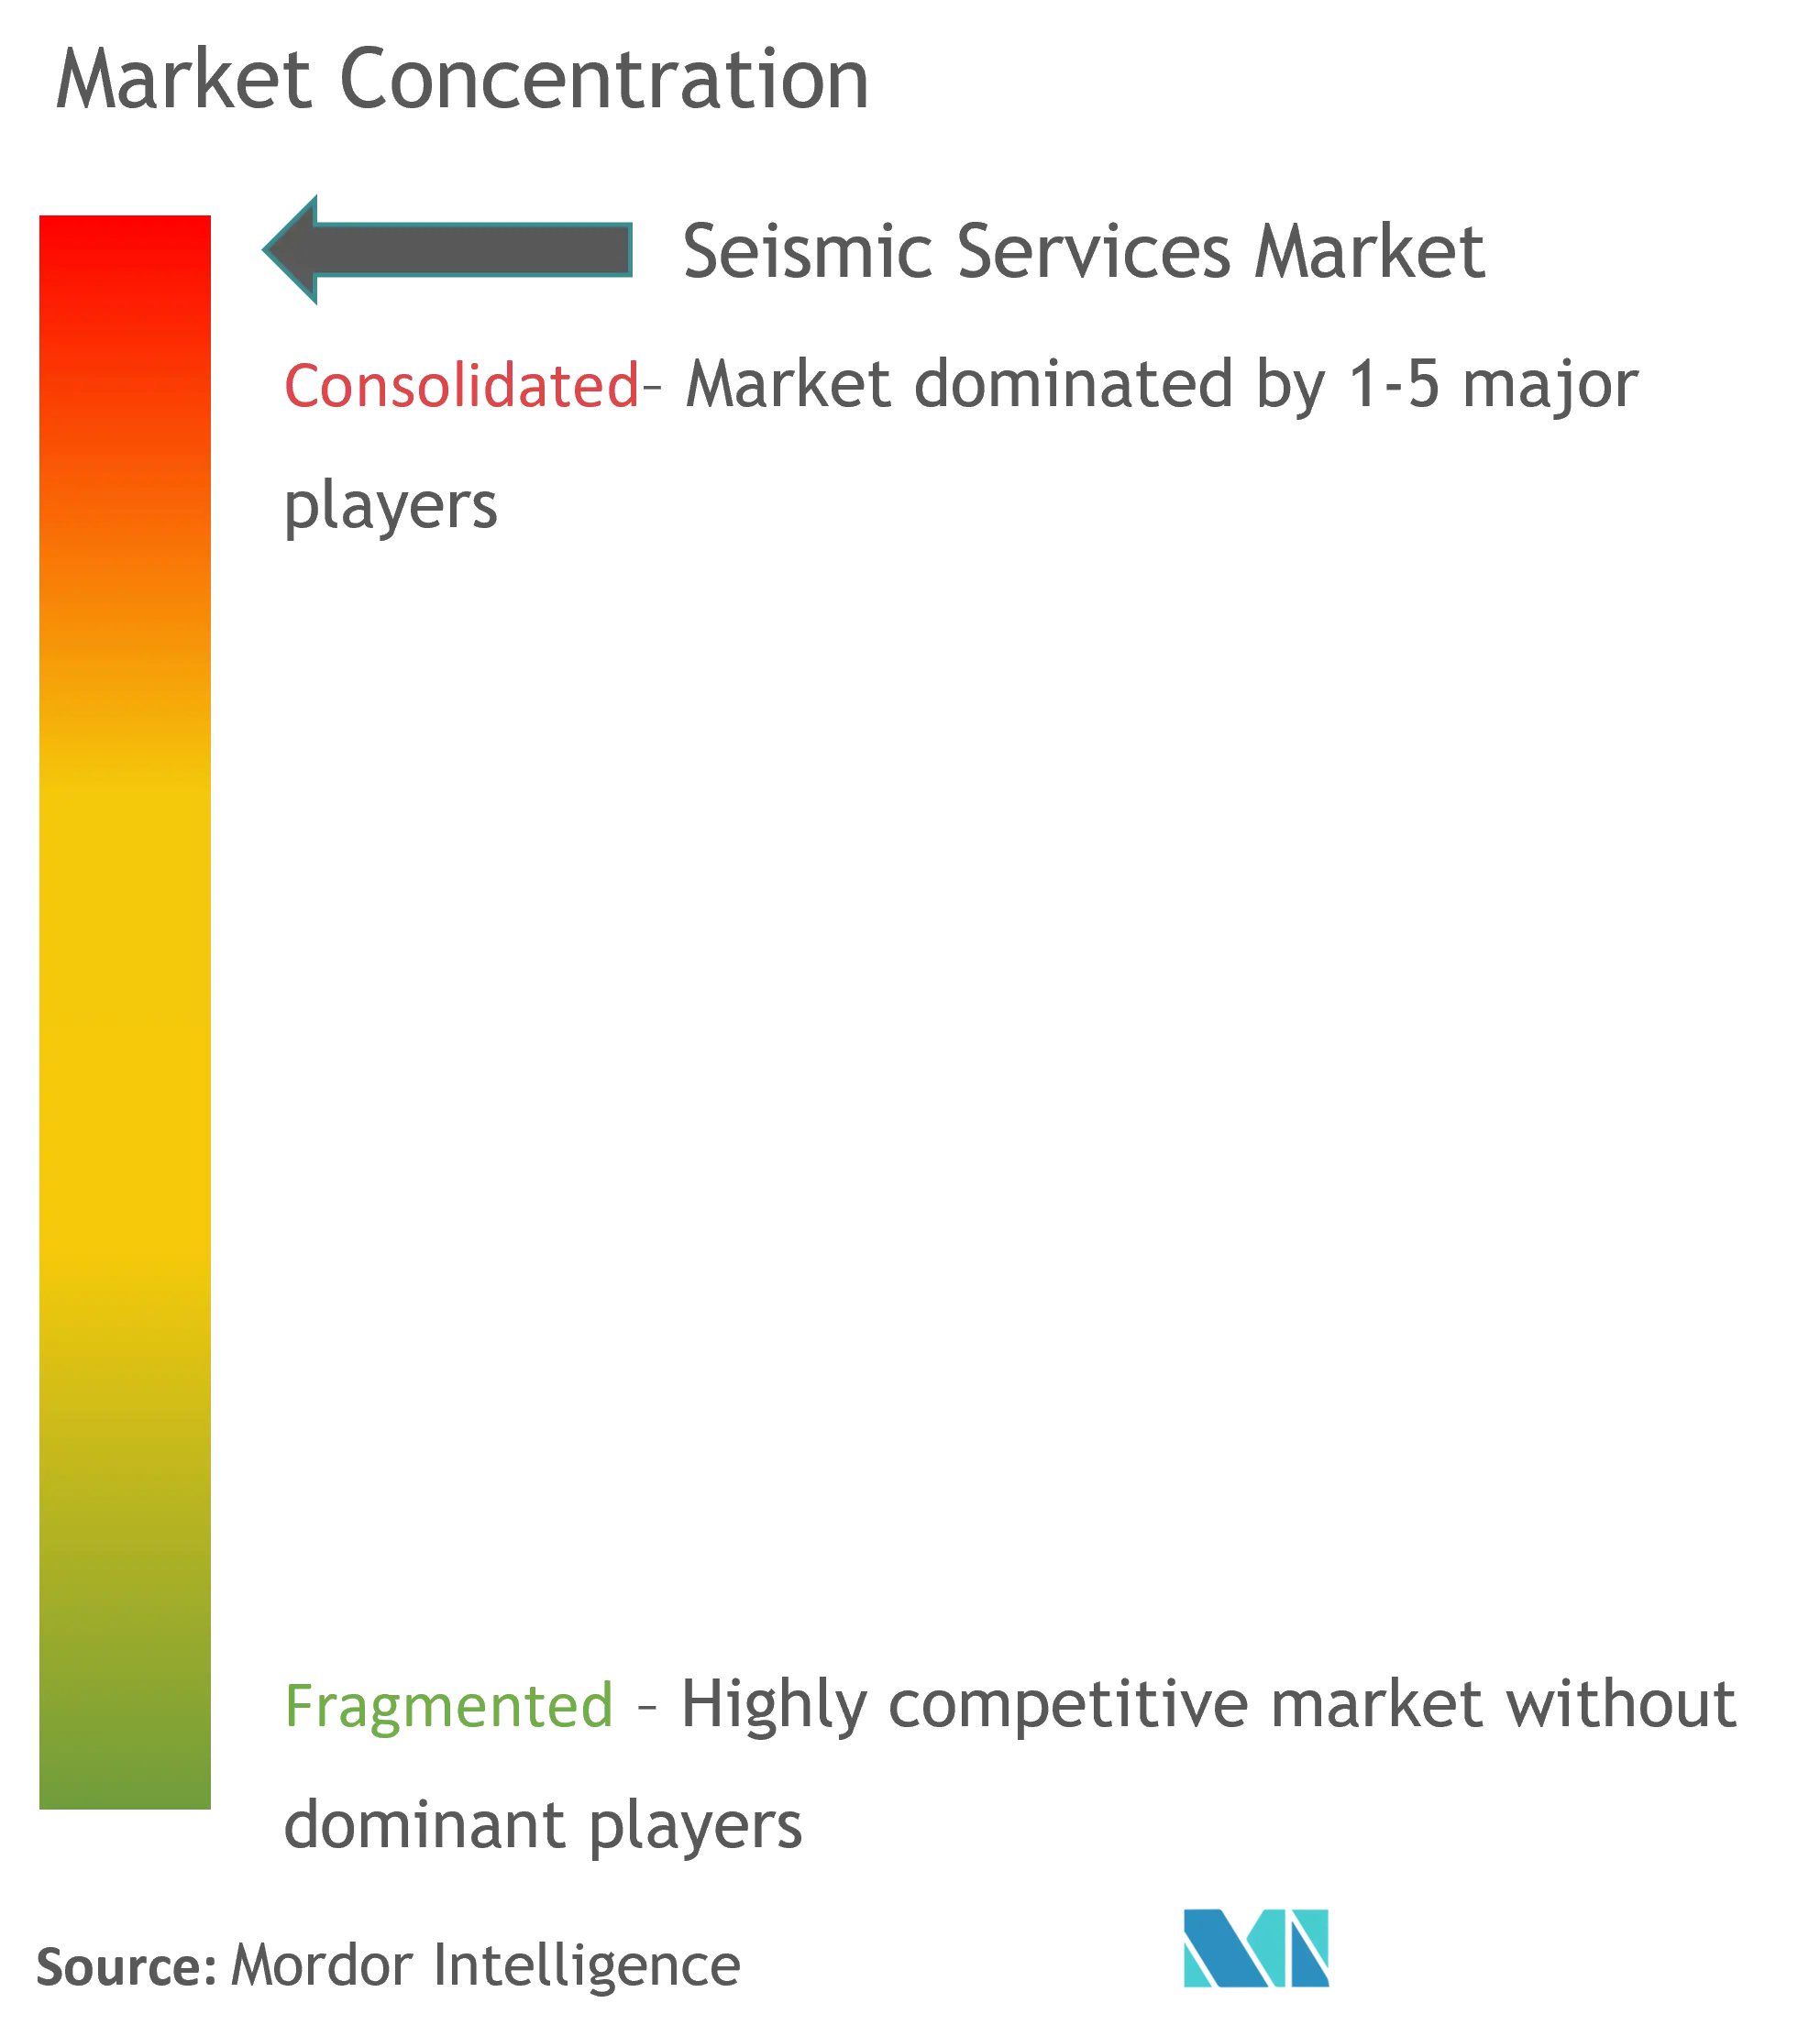 Market Concentration-Seismic Services Market.png